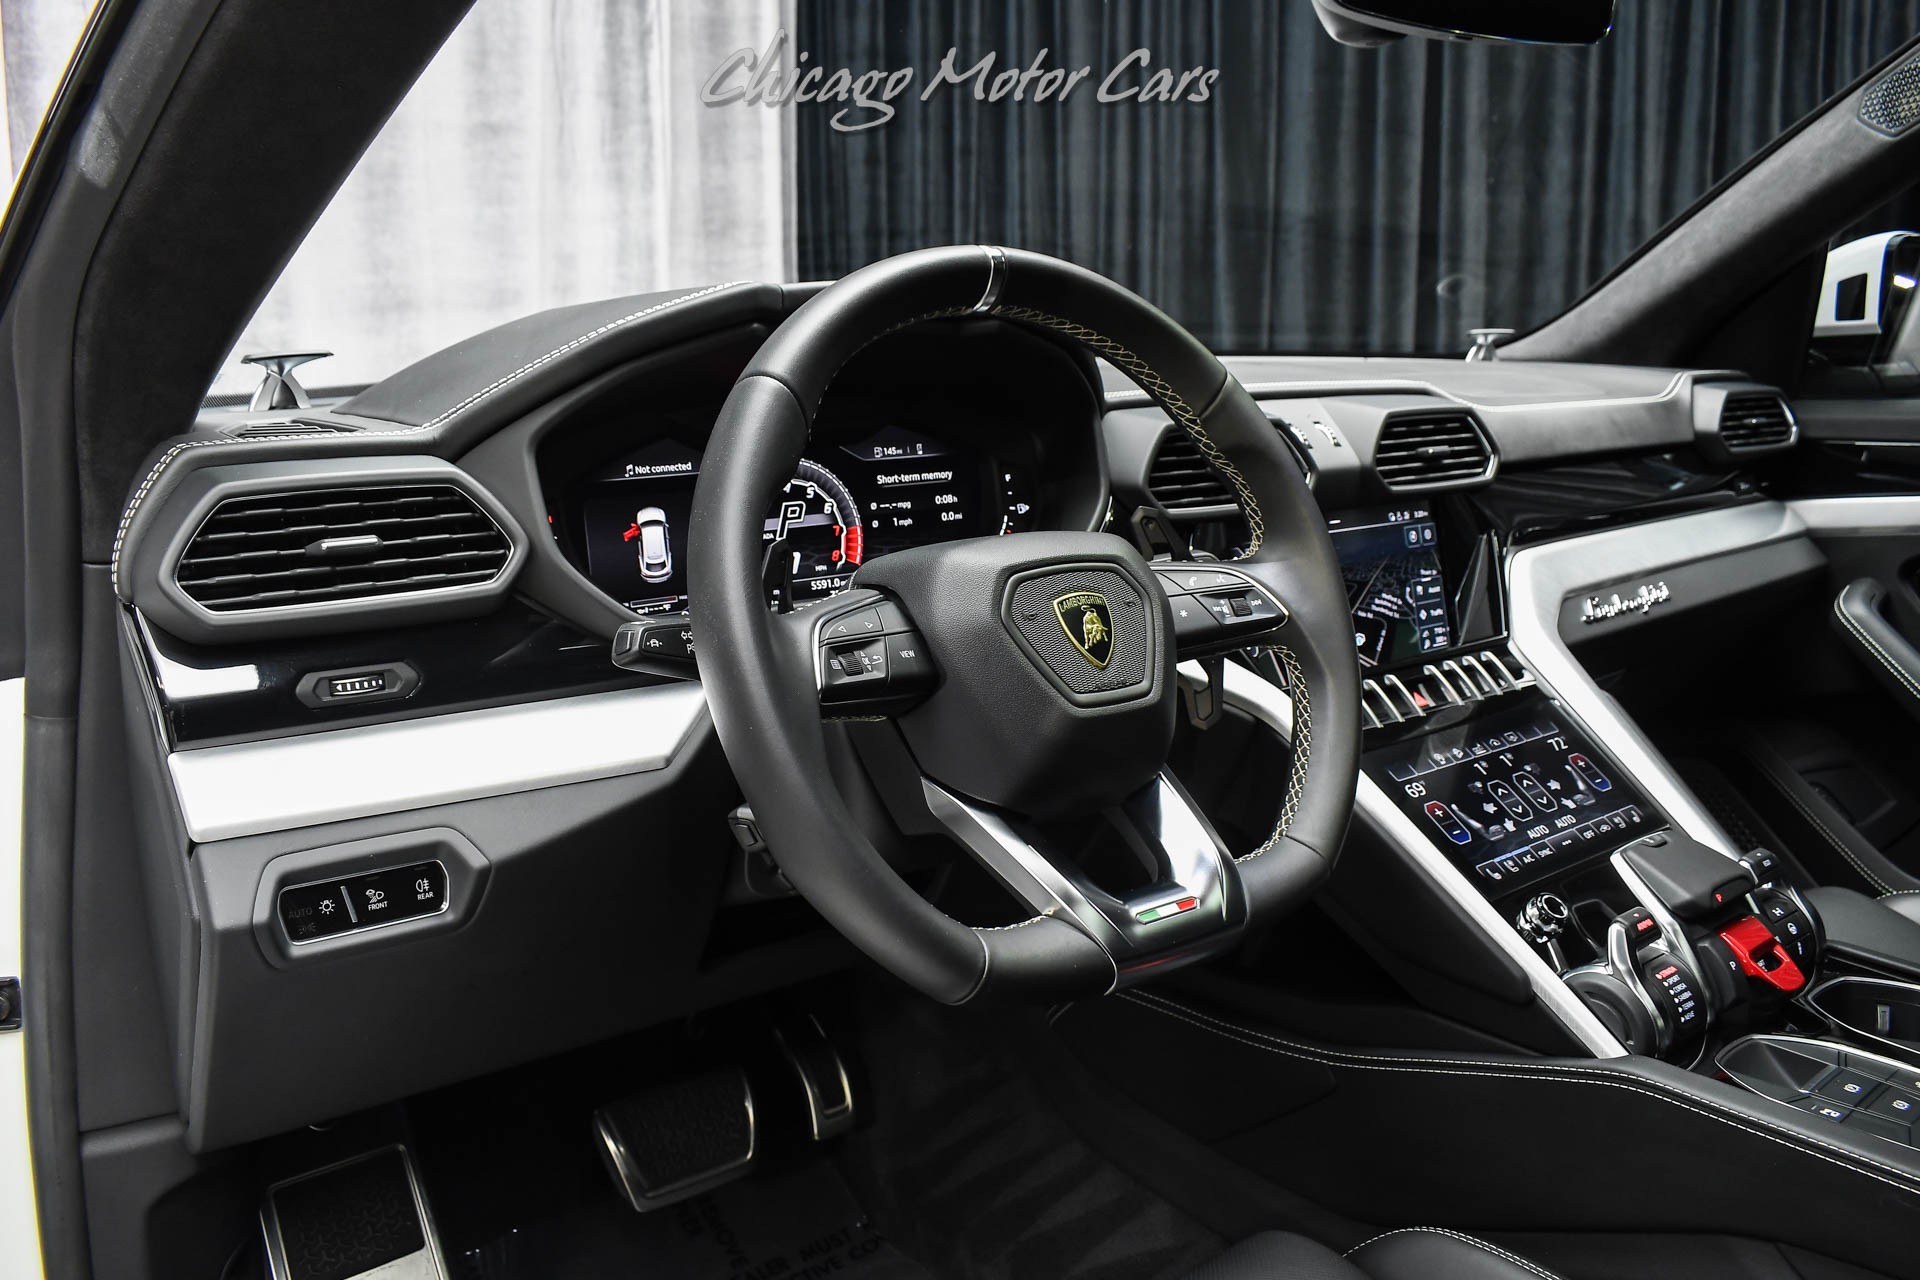 Used-2020-Lamborghini-Urus-SUV-ONLY-5K-Miles-Advanced-3D-Audio-Comfort-Seats-Style-Pkg-Front-PPF